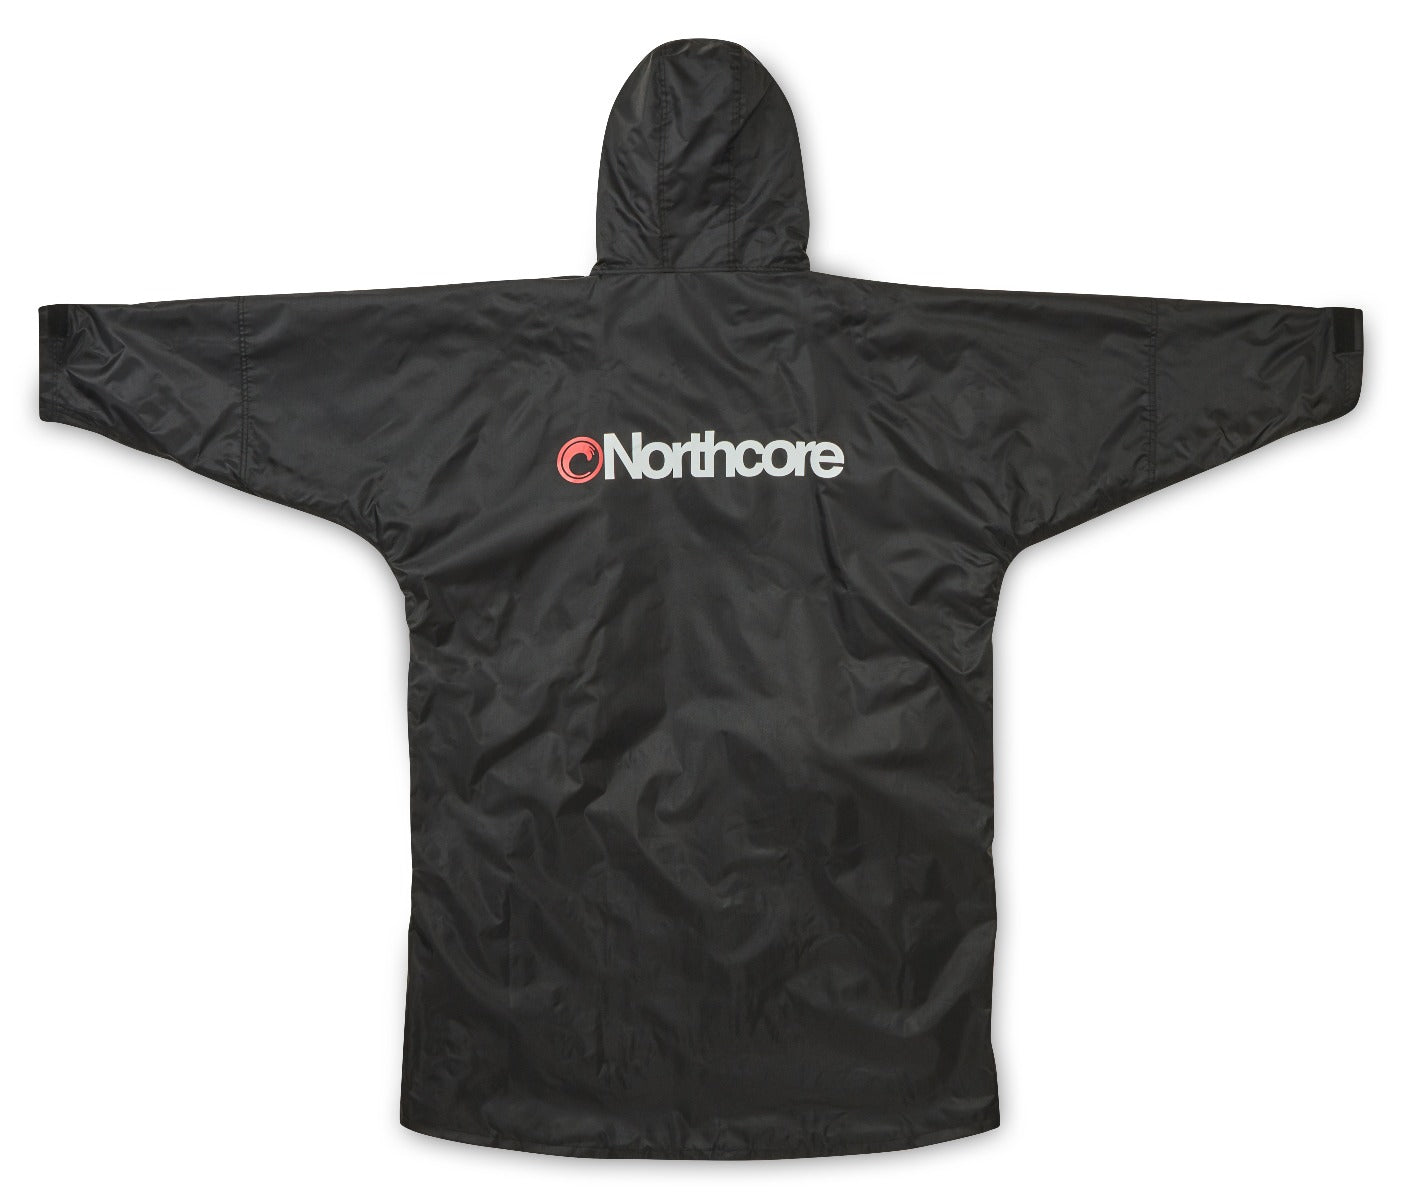 Northcore Beach Basha Pro – the four-season convertible changing robe!